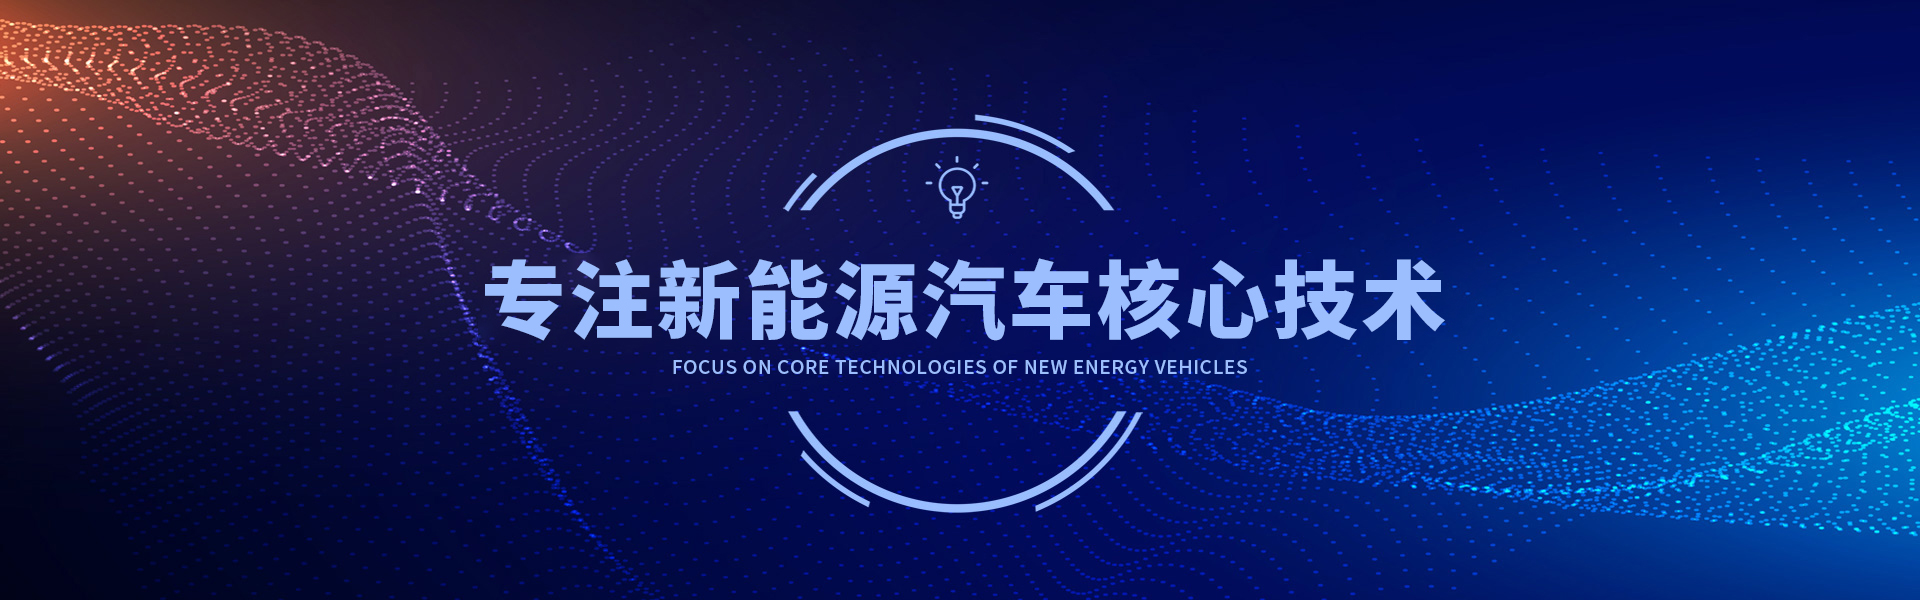 AG九游会品牌专注新能源汽车核心技术11年